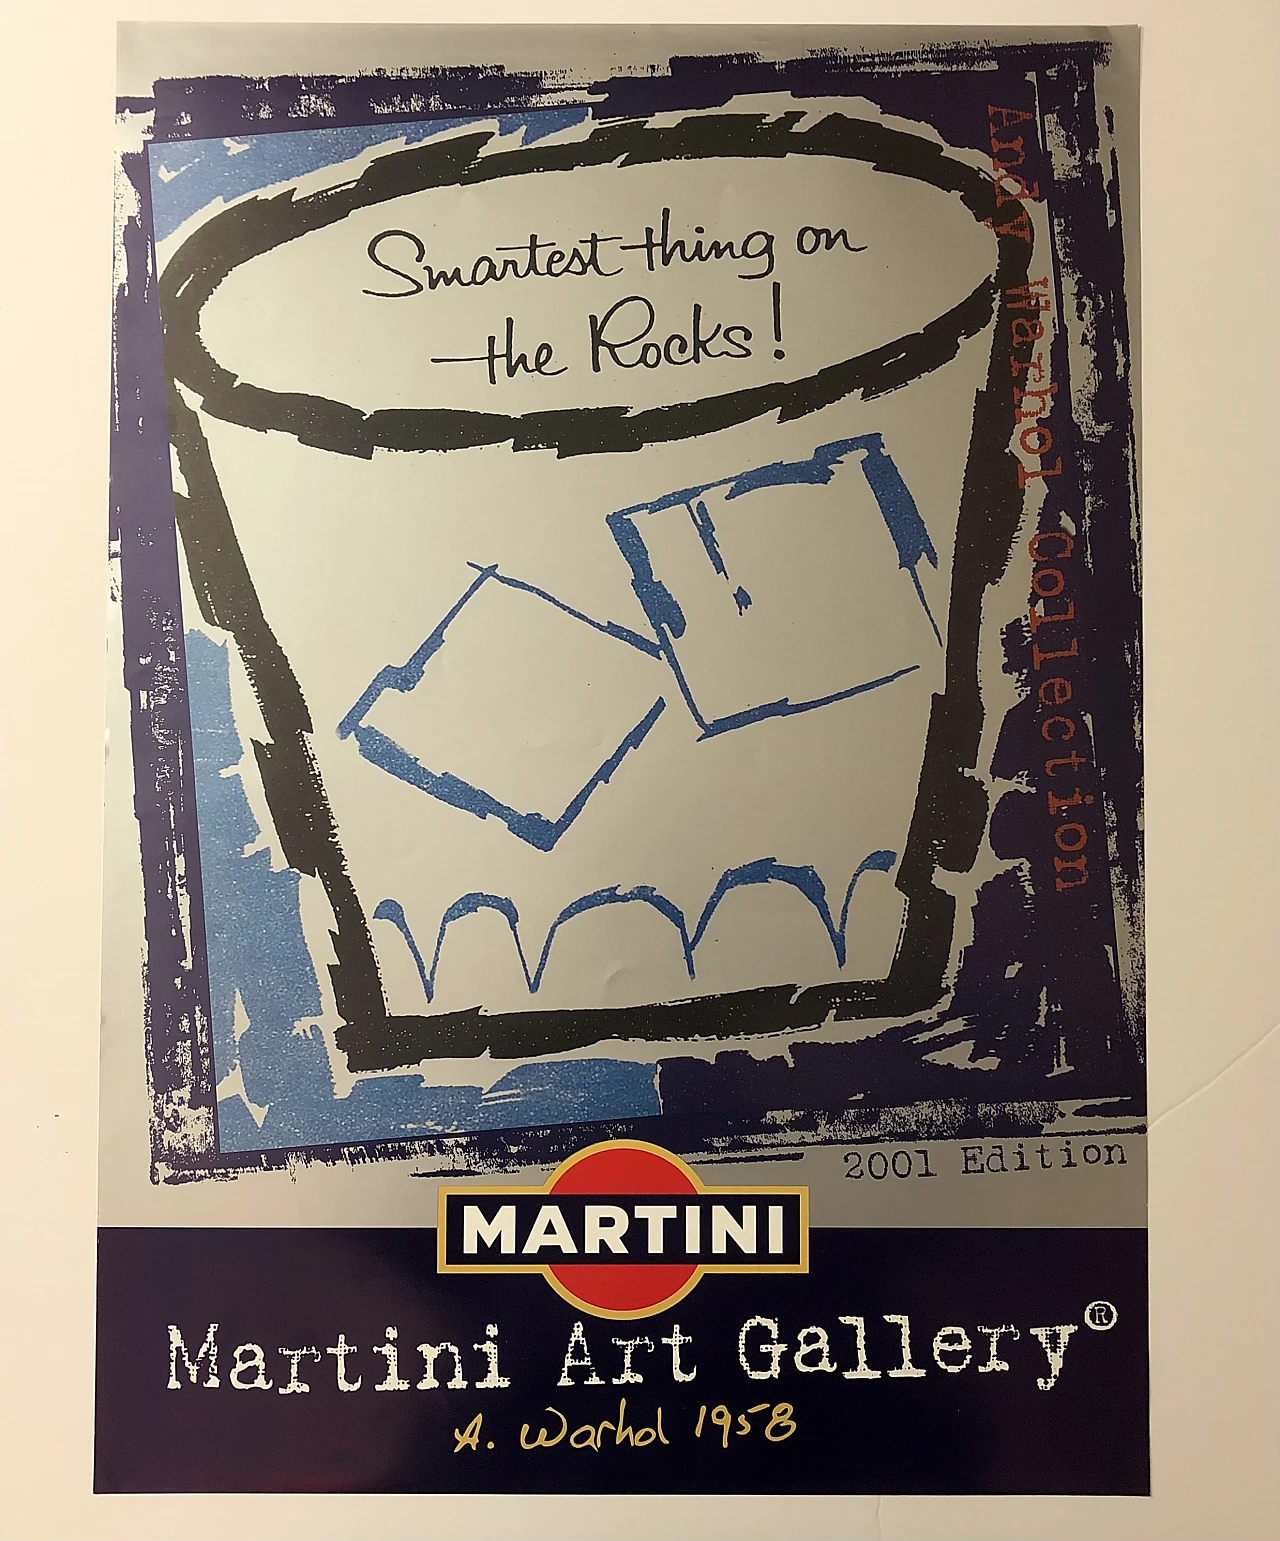 Da Andy Warhol, Martini Art Gallery, litografia, 2001 2